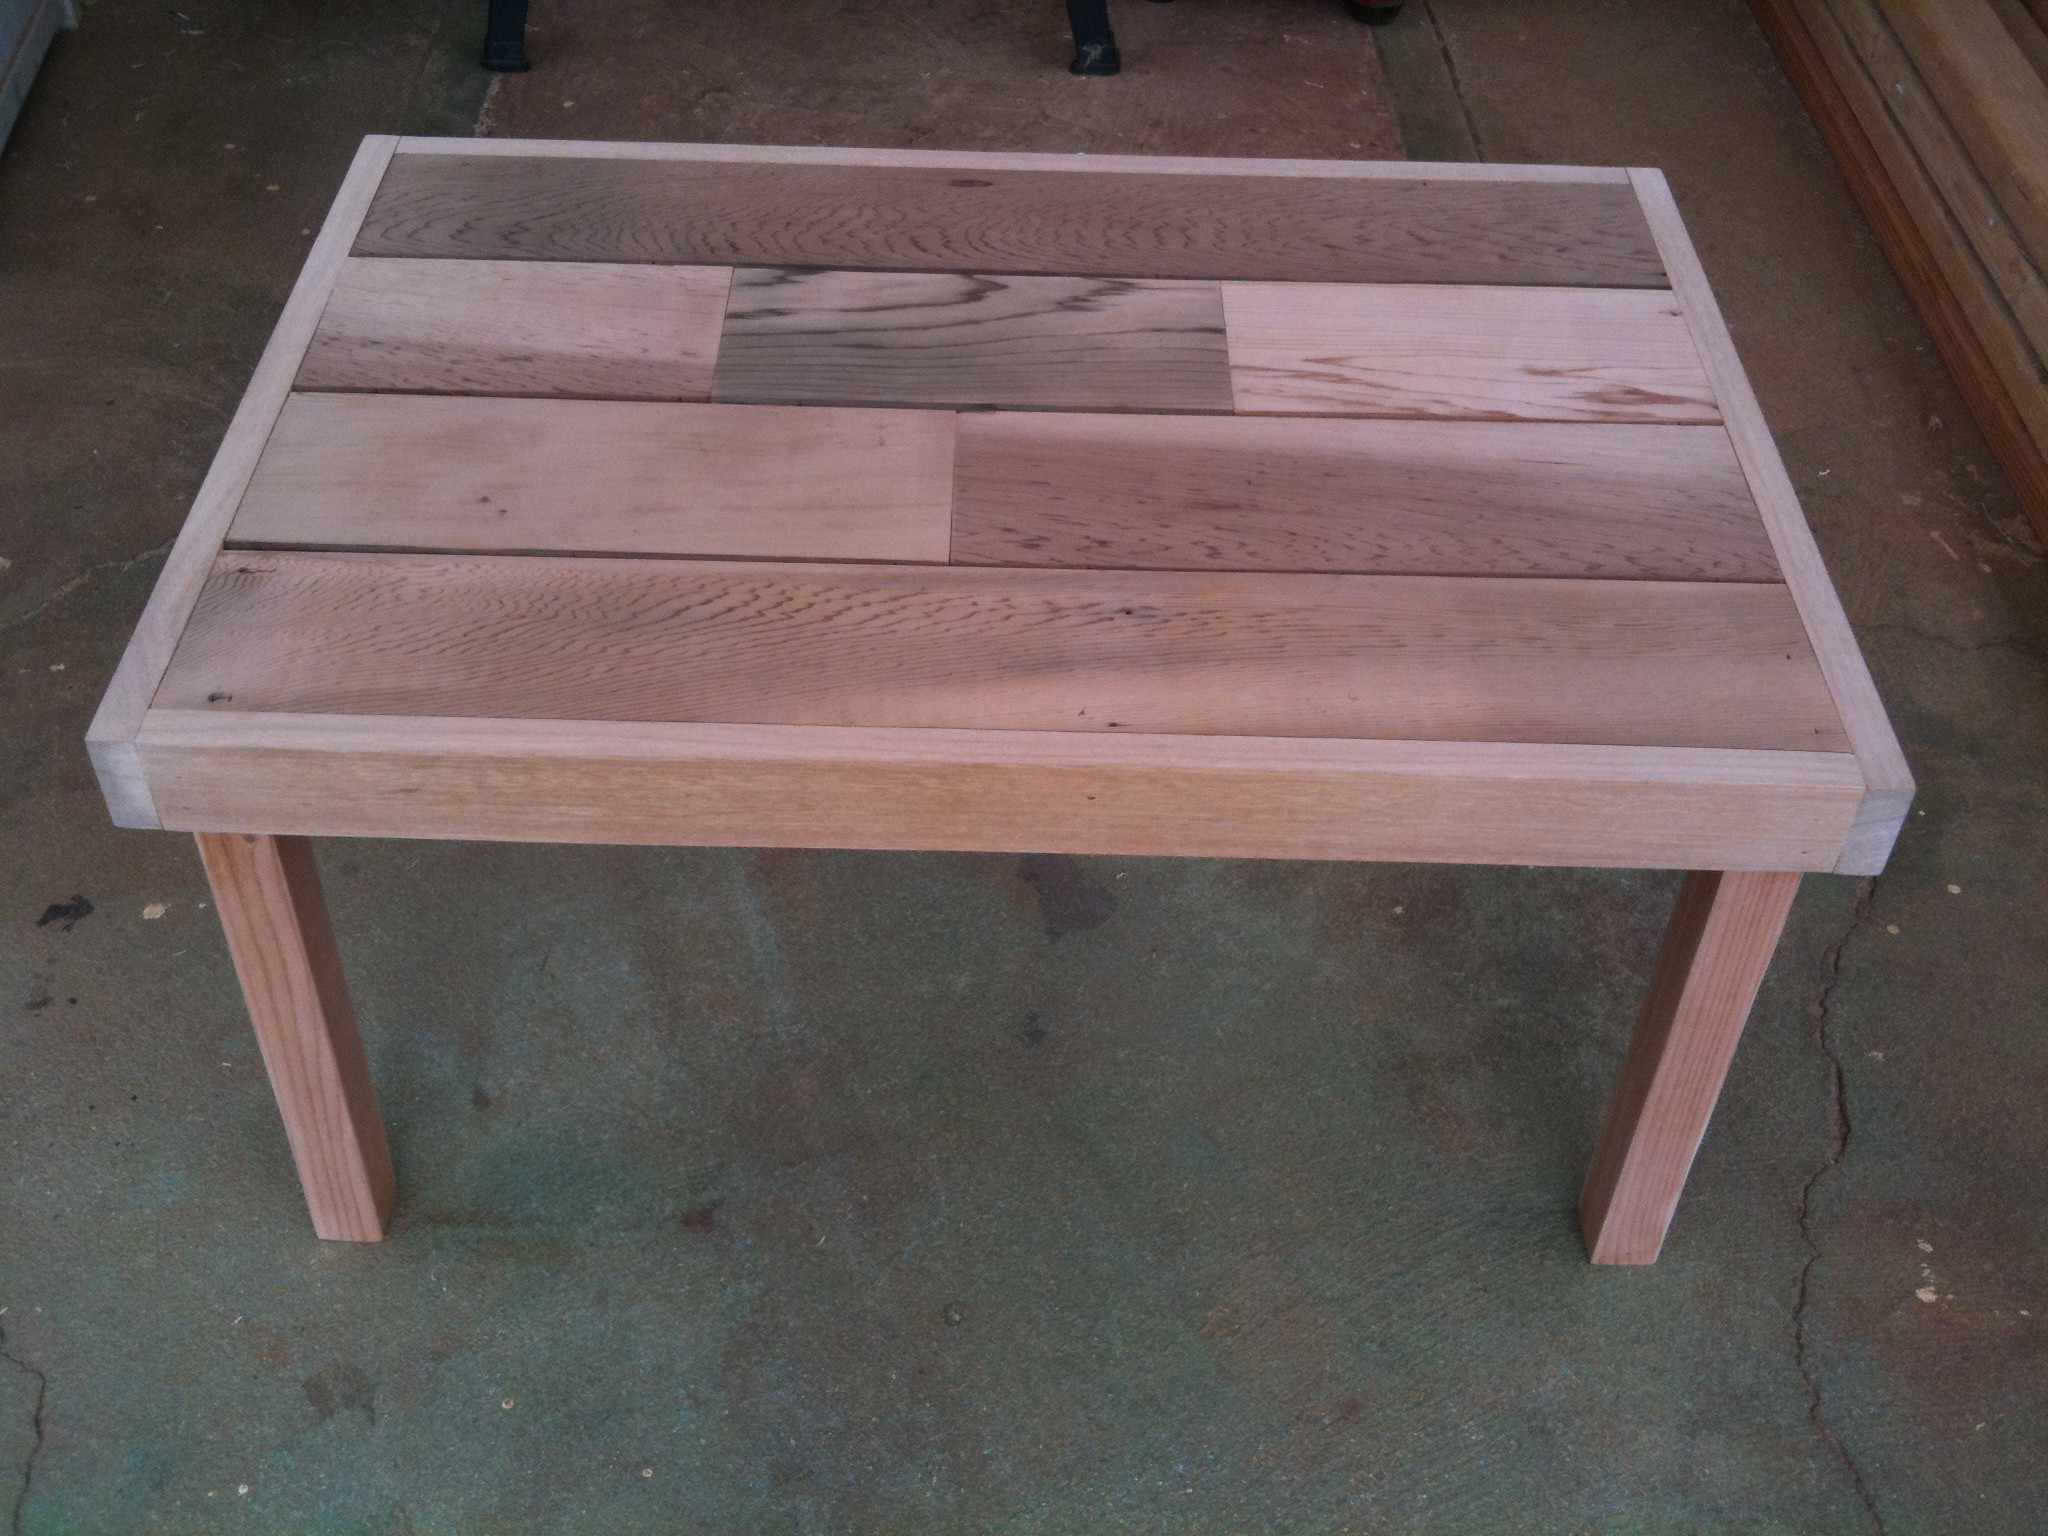 Reclaimed Wood Coffee Table DIY
 Ana White